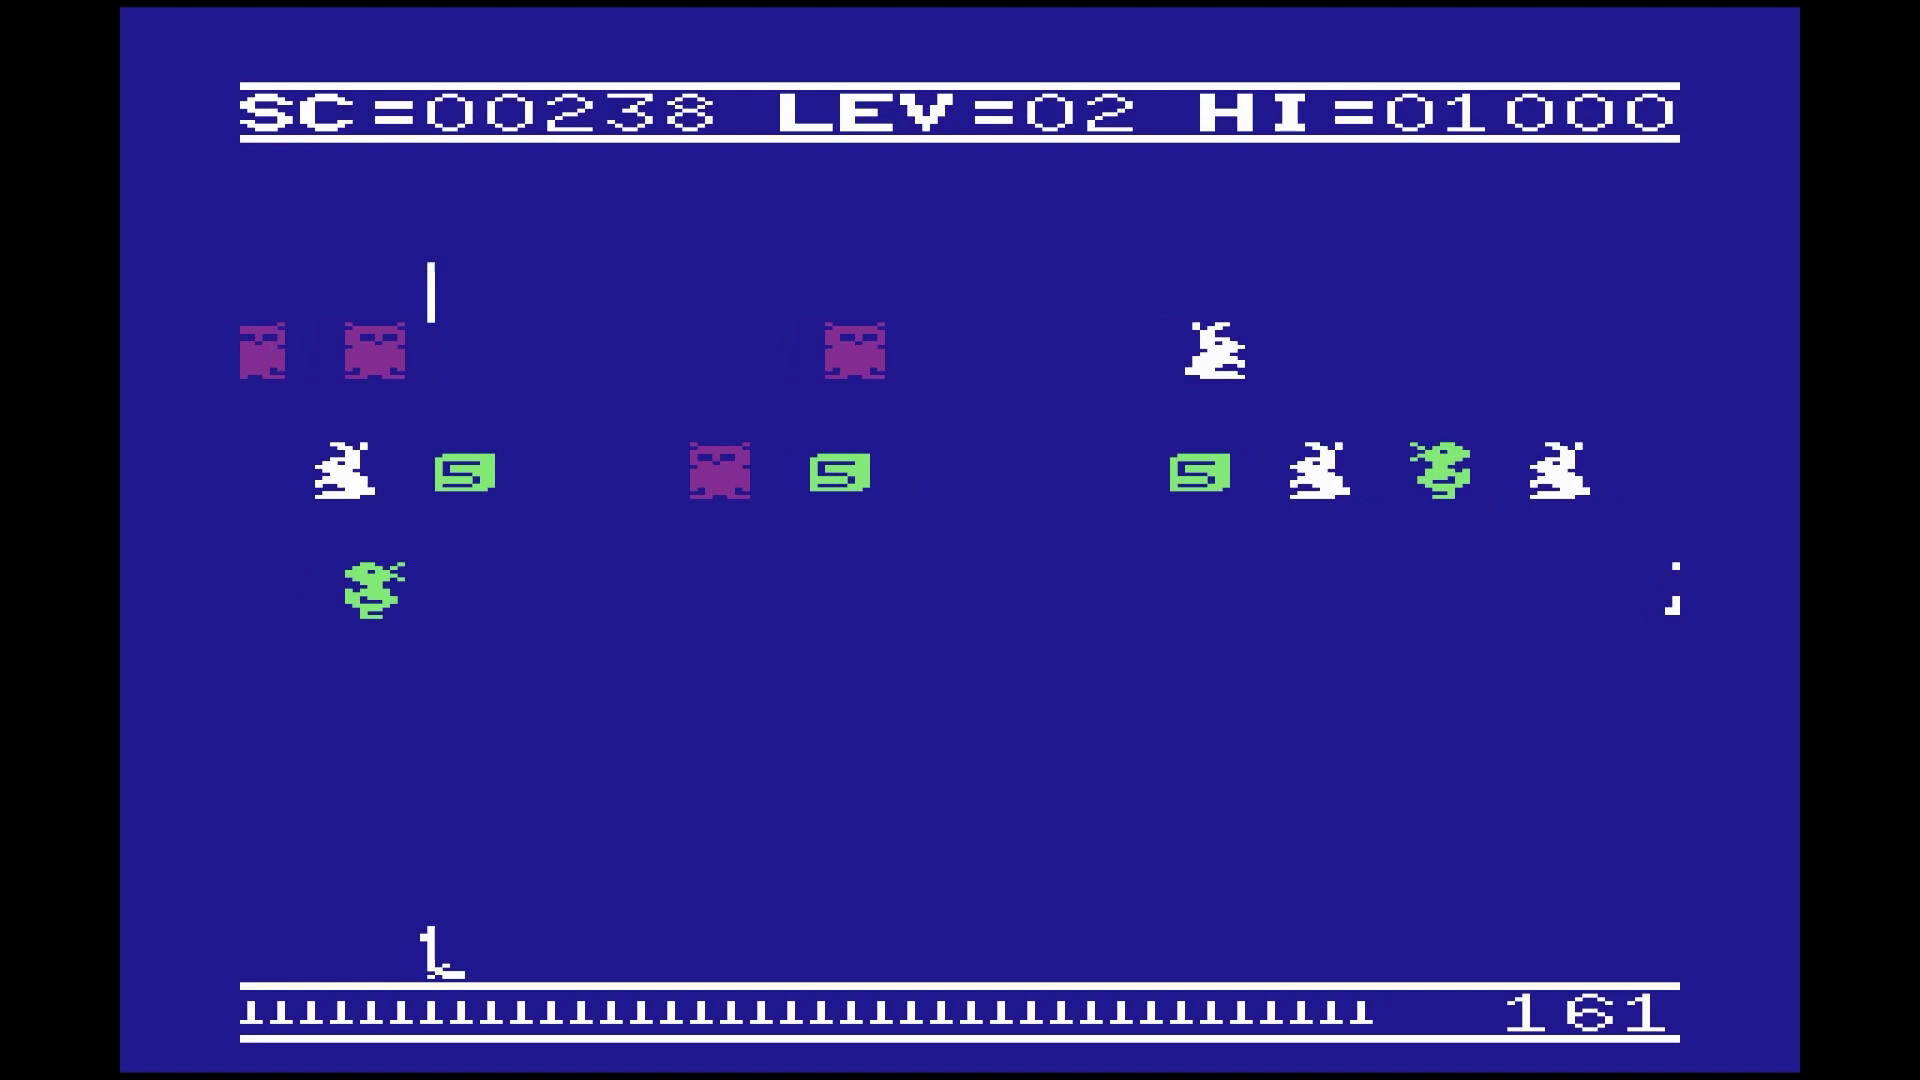 Duck Shoot (C64/VIC-20) 게임 스크린 샷